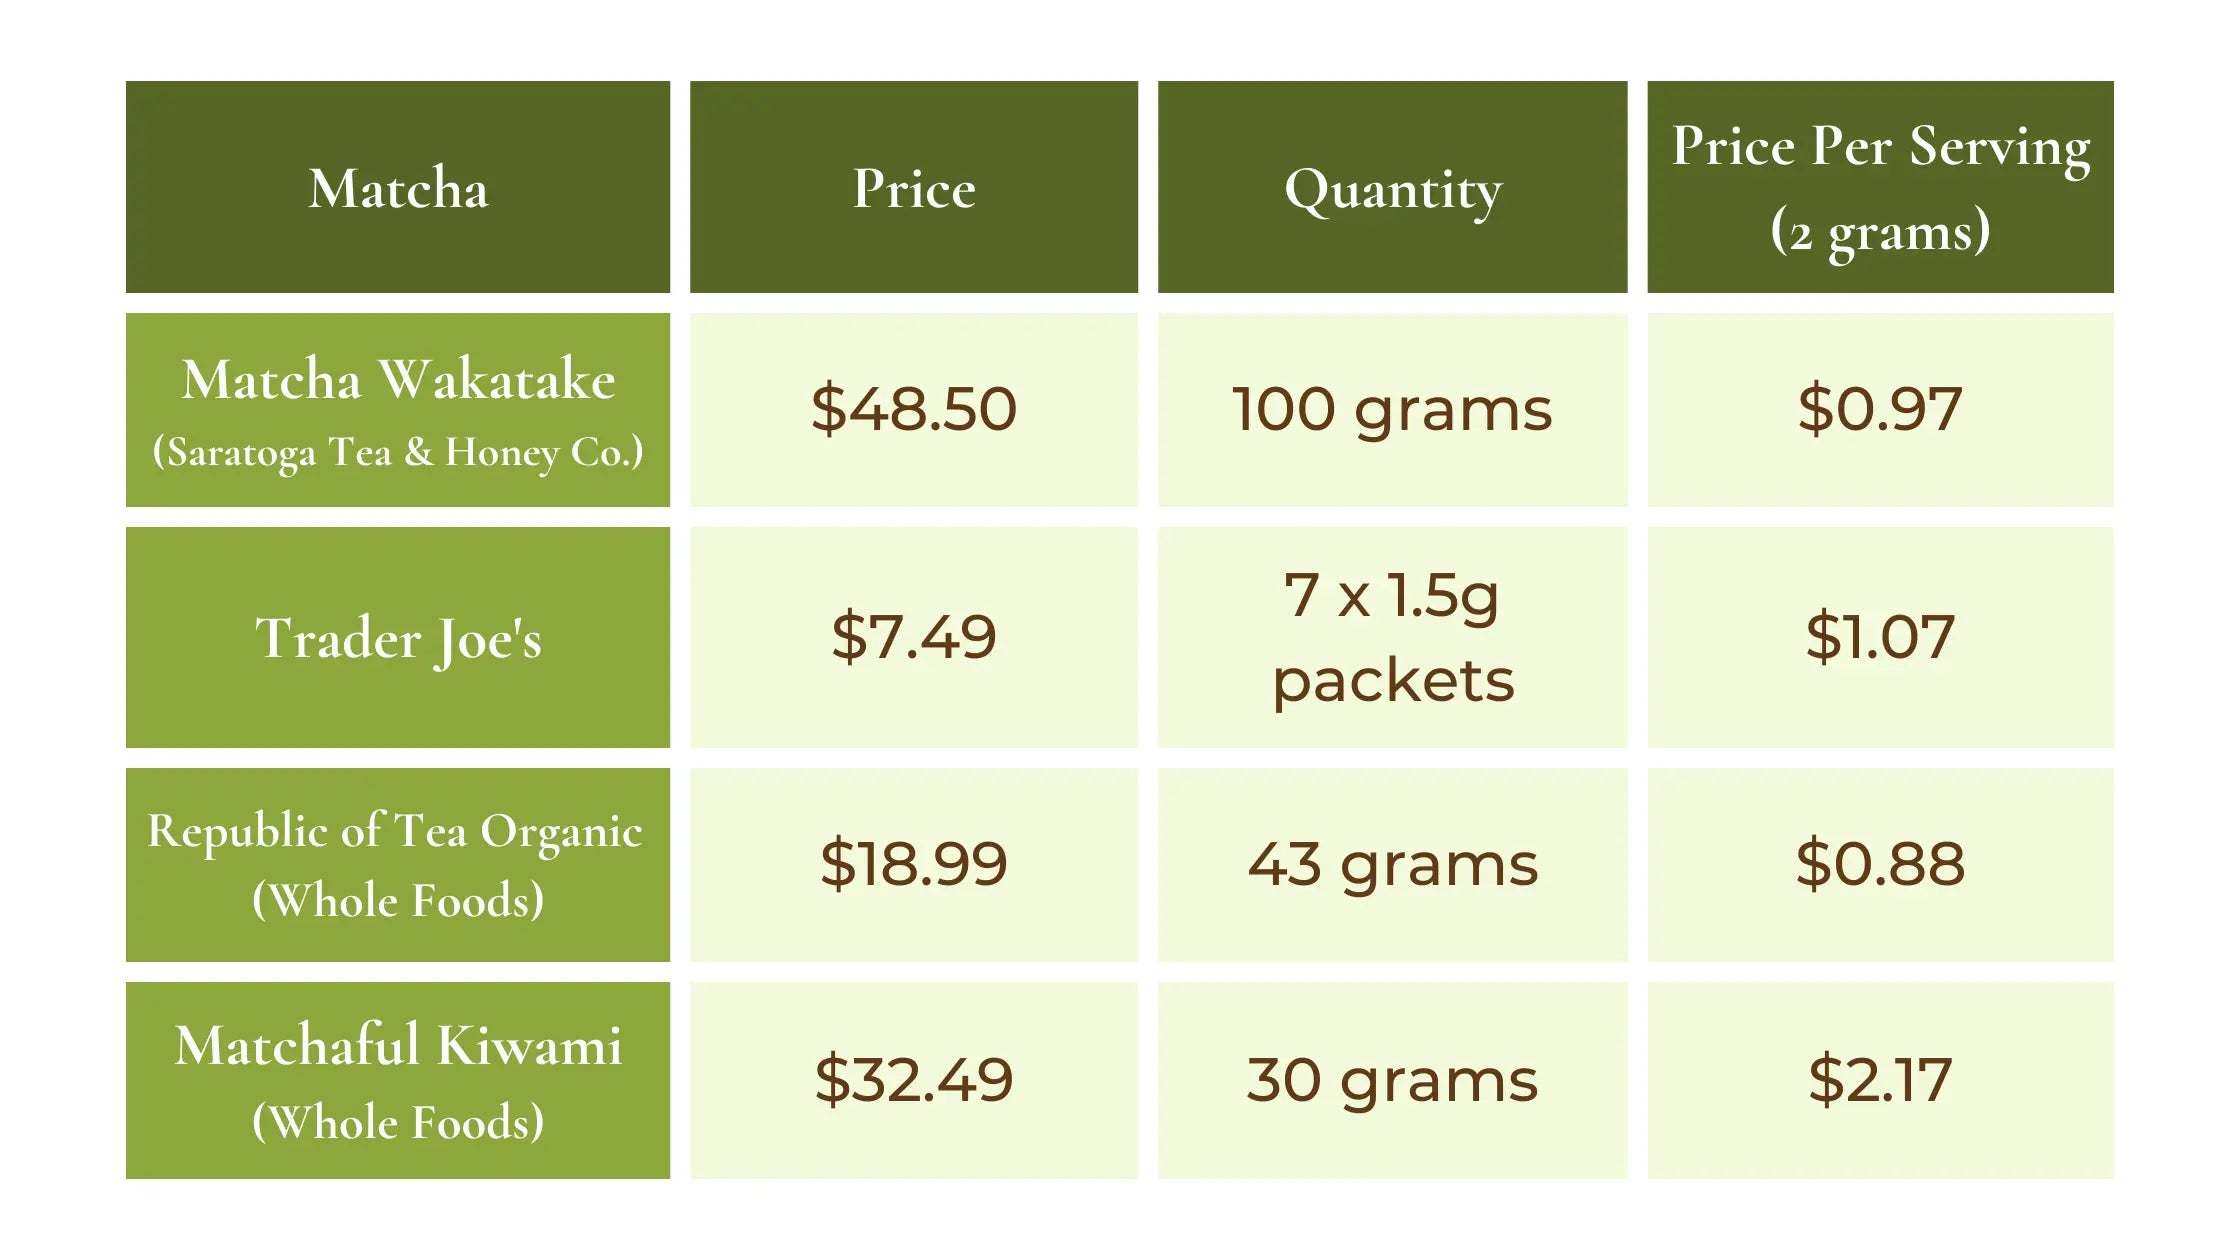 Chart showing Matcha prices per serving. Matcha Wakatake ($0.97/per serving), Trader Joe's ($1.07/serving), Republic of Tea Organic ($0.88/serving), Matchaful Kiwami ($2.17/serving)